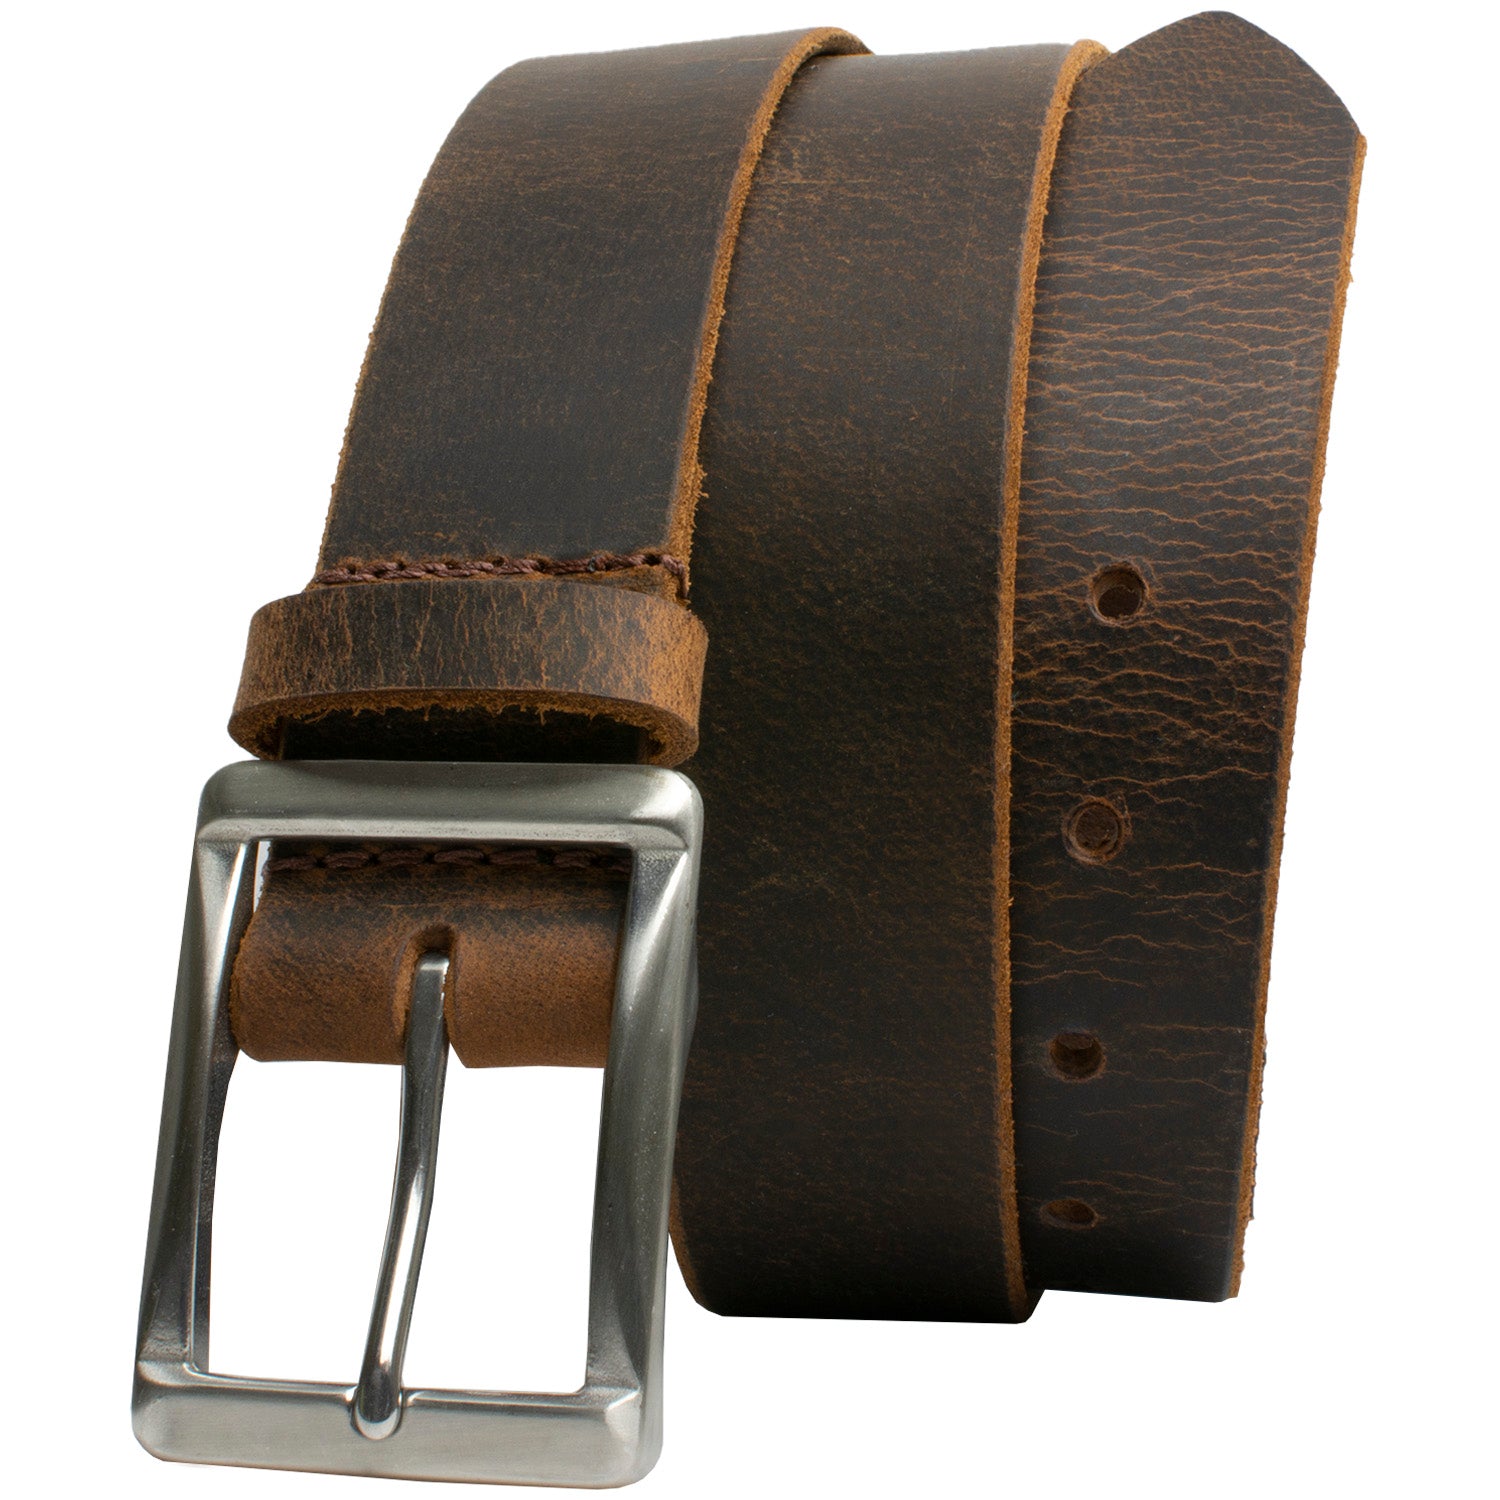 Mens Leather Belt, Mens Belt, Mens Belt Leather, Distressed Rugged